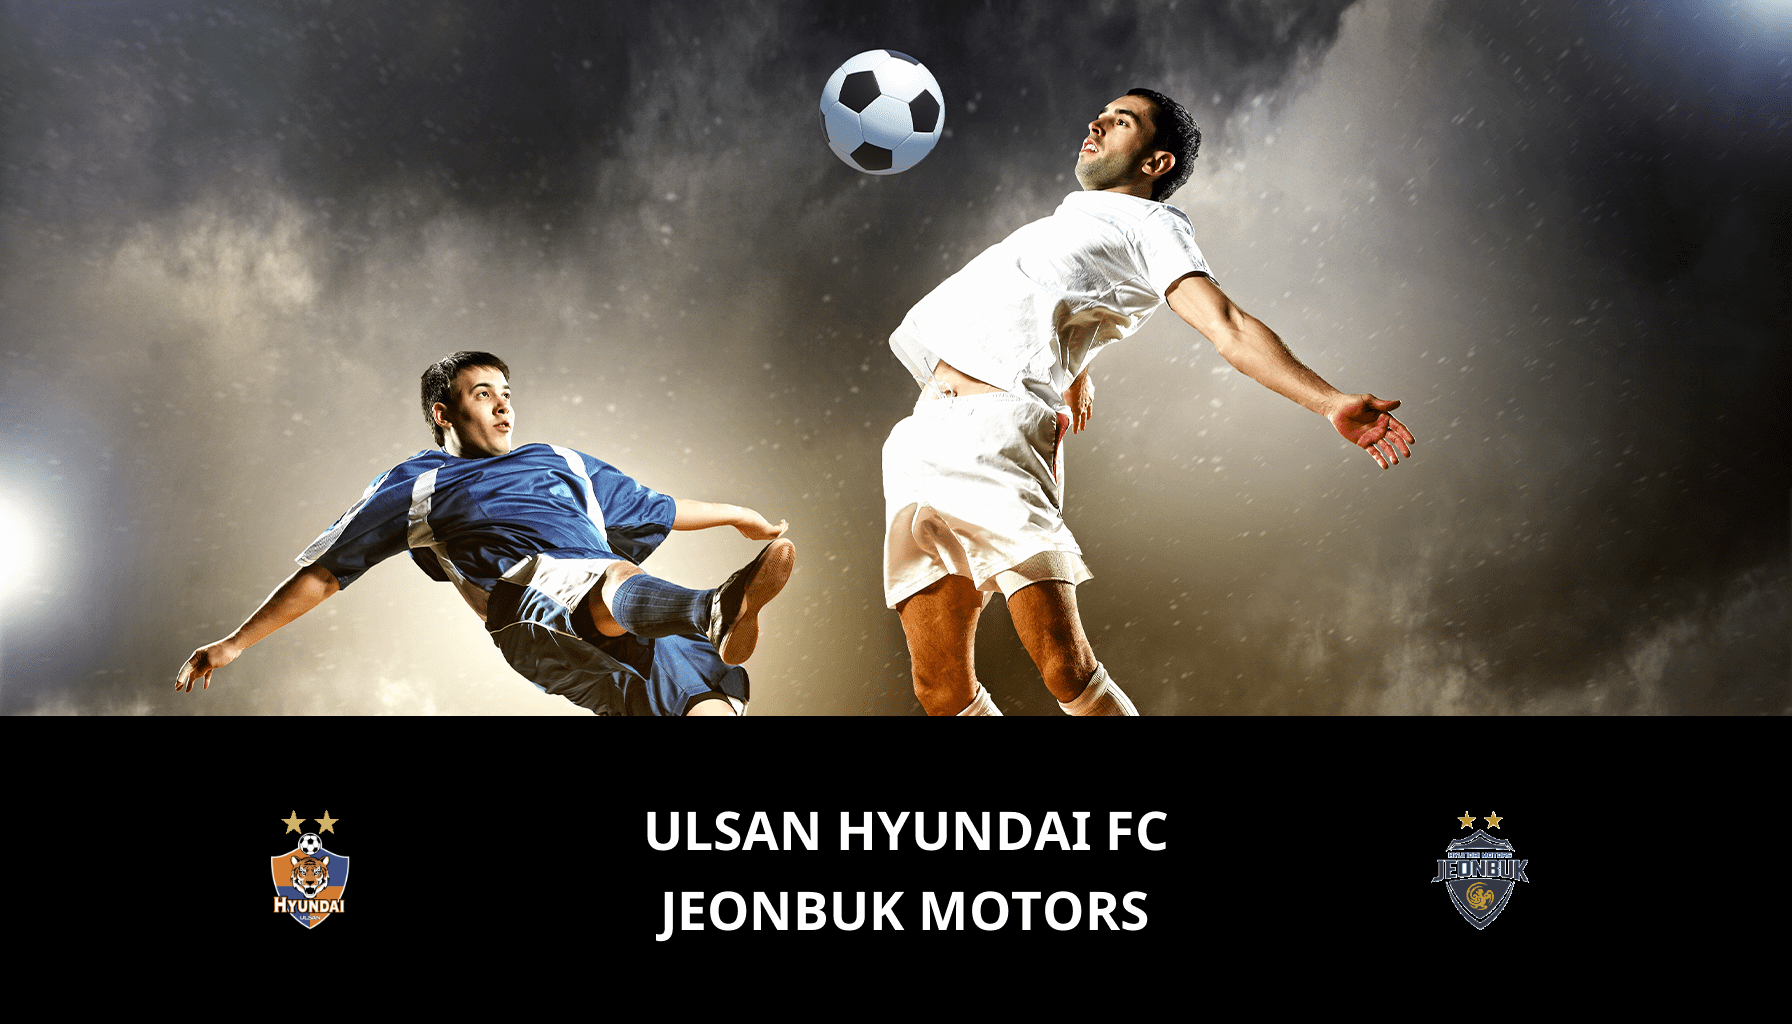 Previsione per Ulsan Hyundai FC VS Jeonbuk Motors il 03/12/2023 Analysis of the match